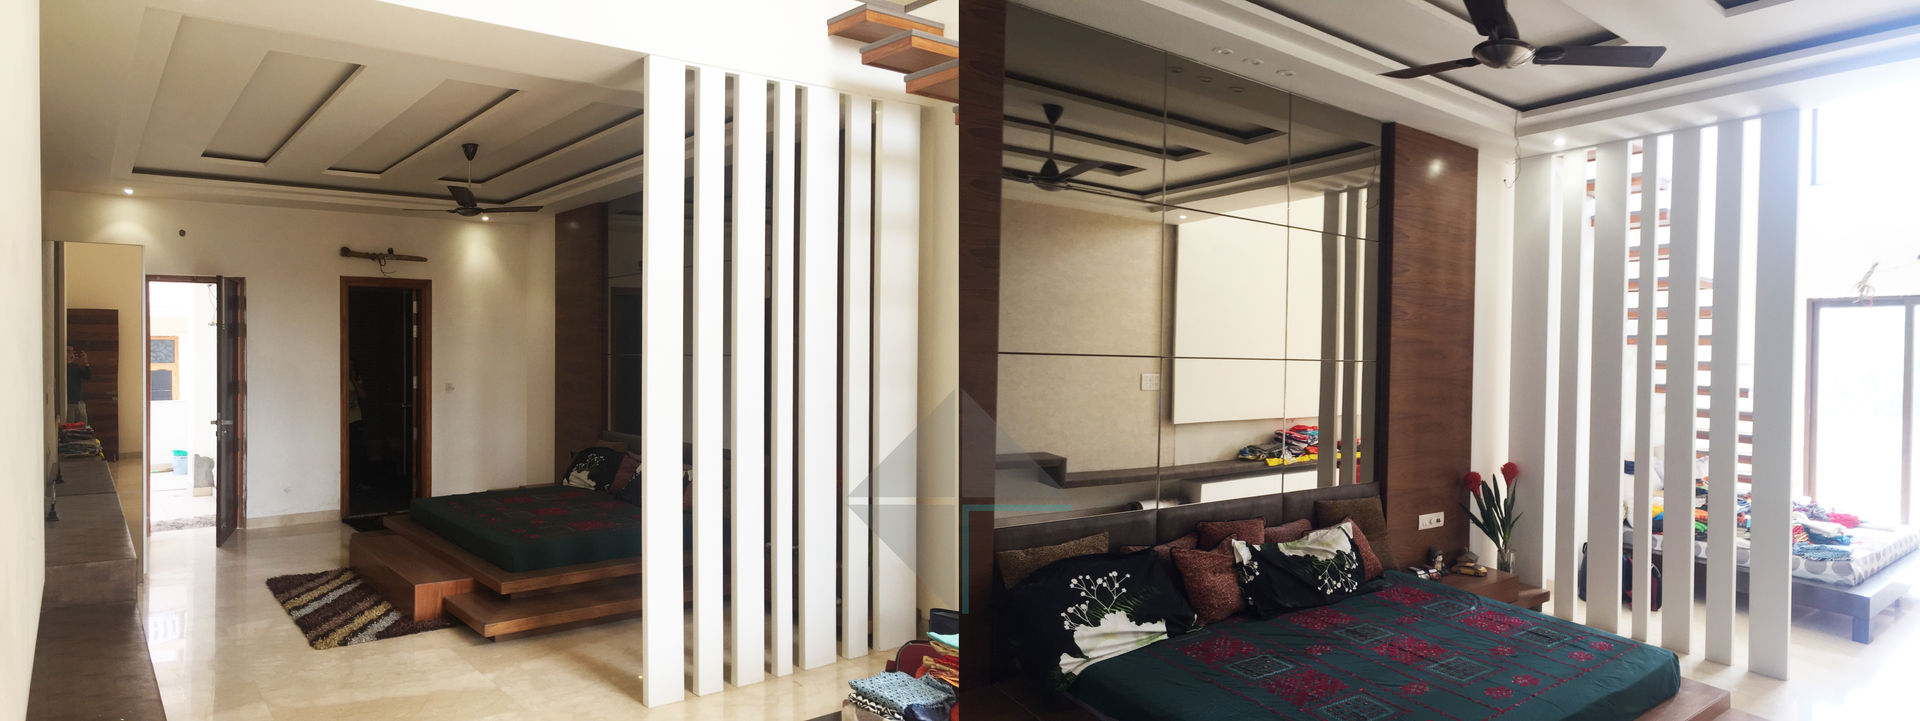 KIRTI BHAWAN, APT Designs APT Designs Dormitorios de estilo moderno